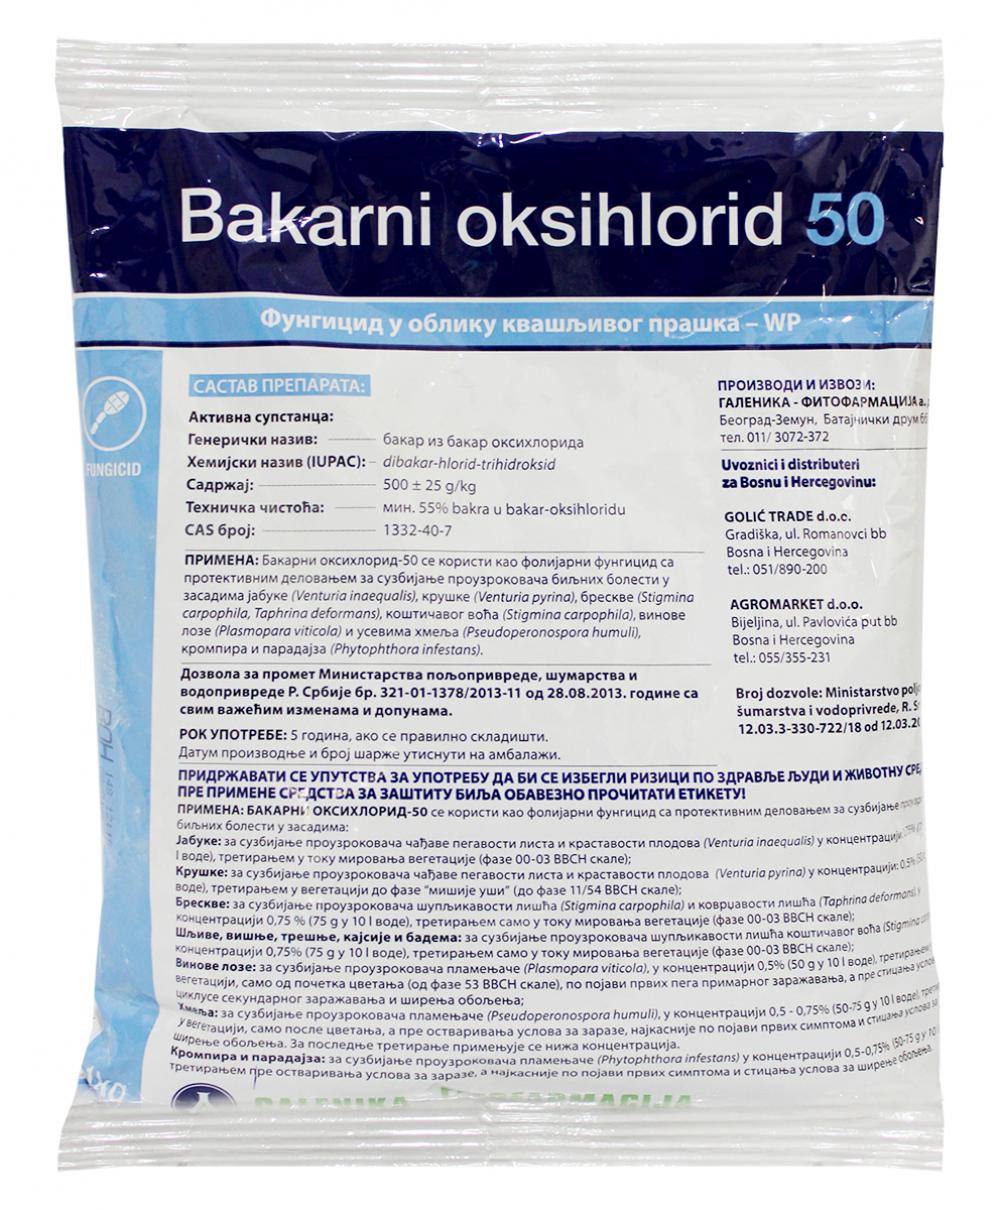 Bakarni oksihlorid 50 (50%bakra iz bakar-oksihlorida)